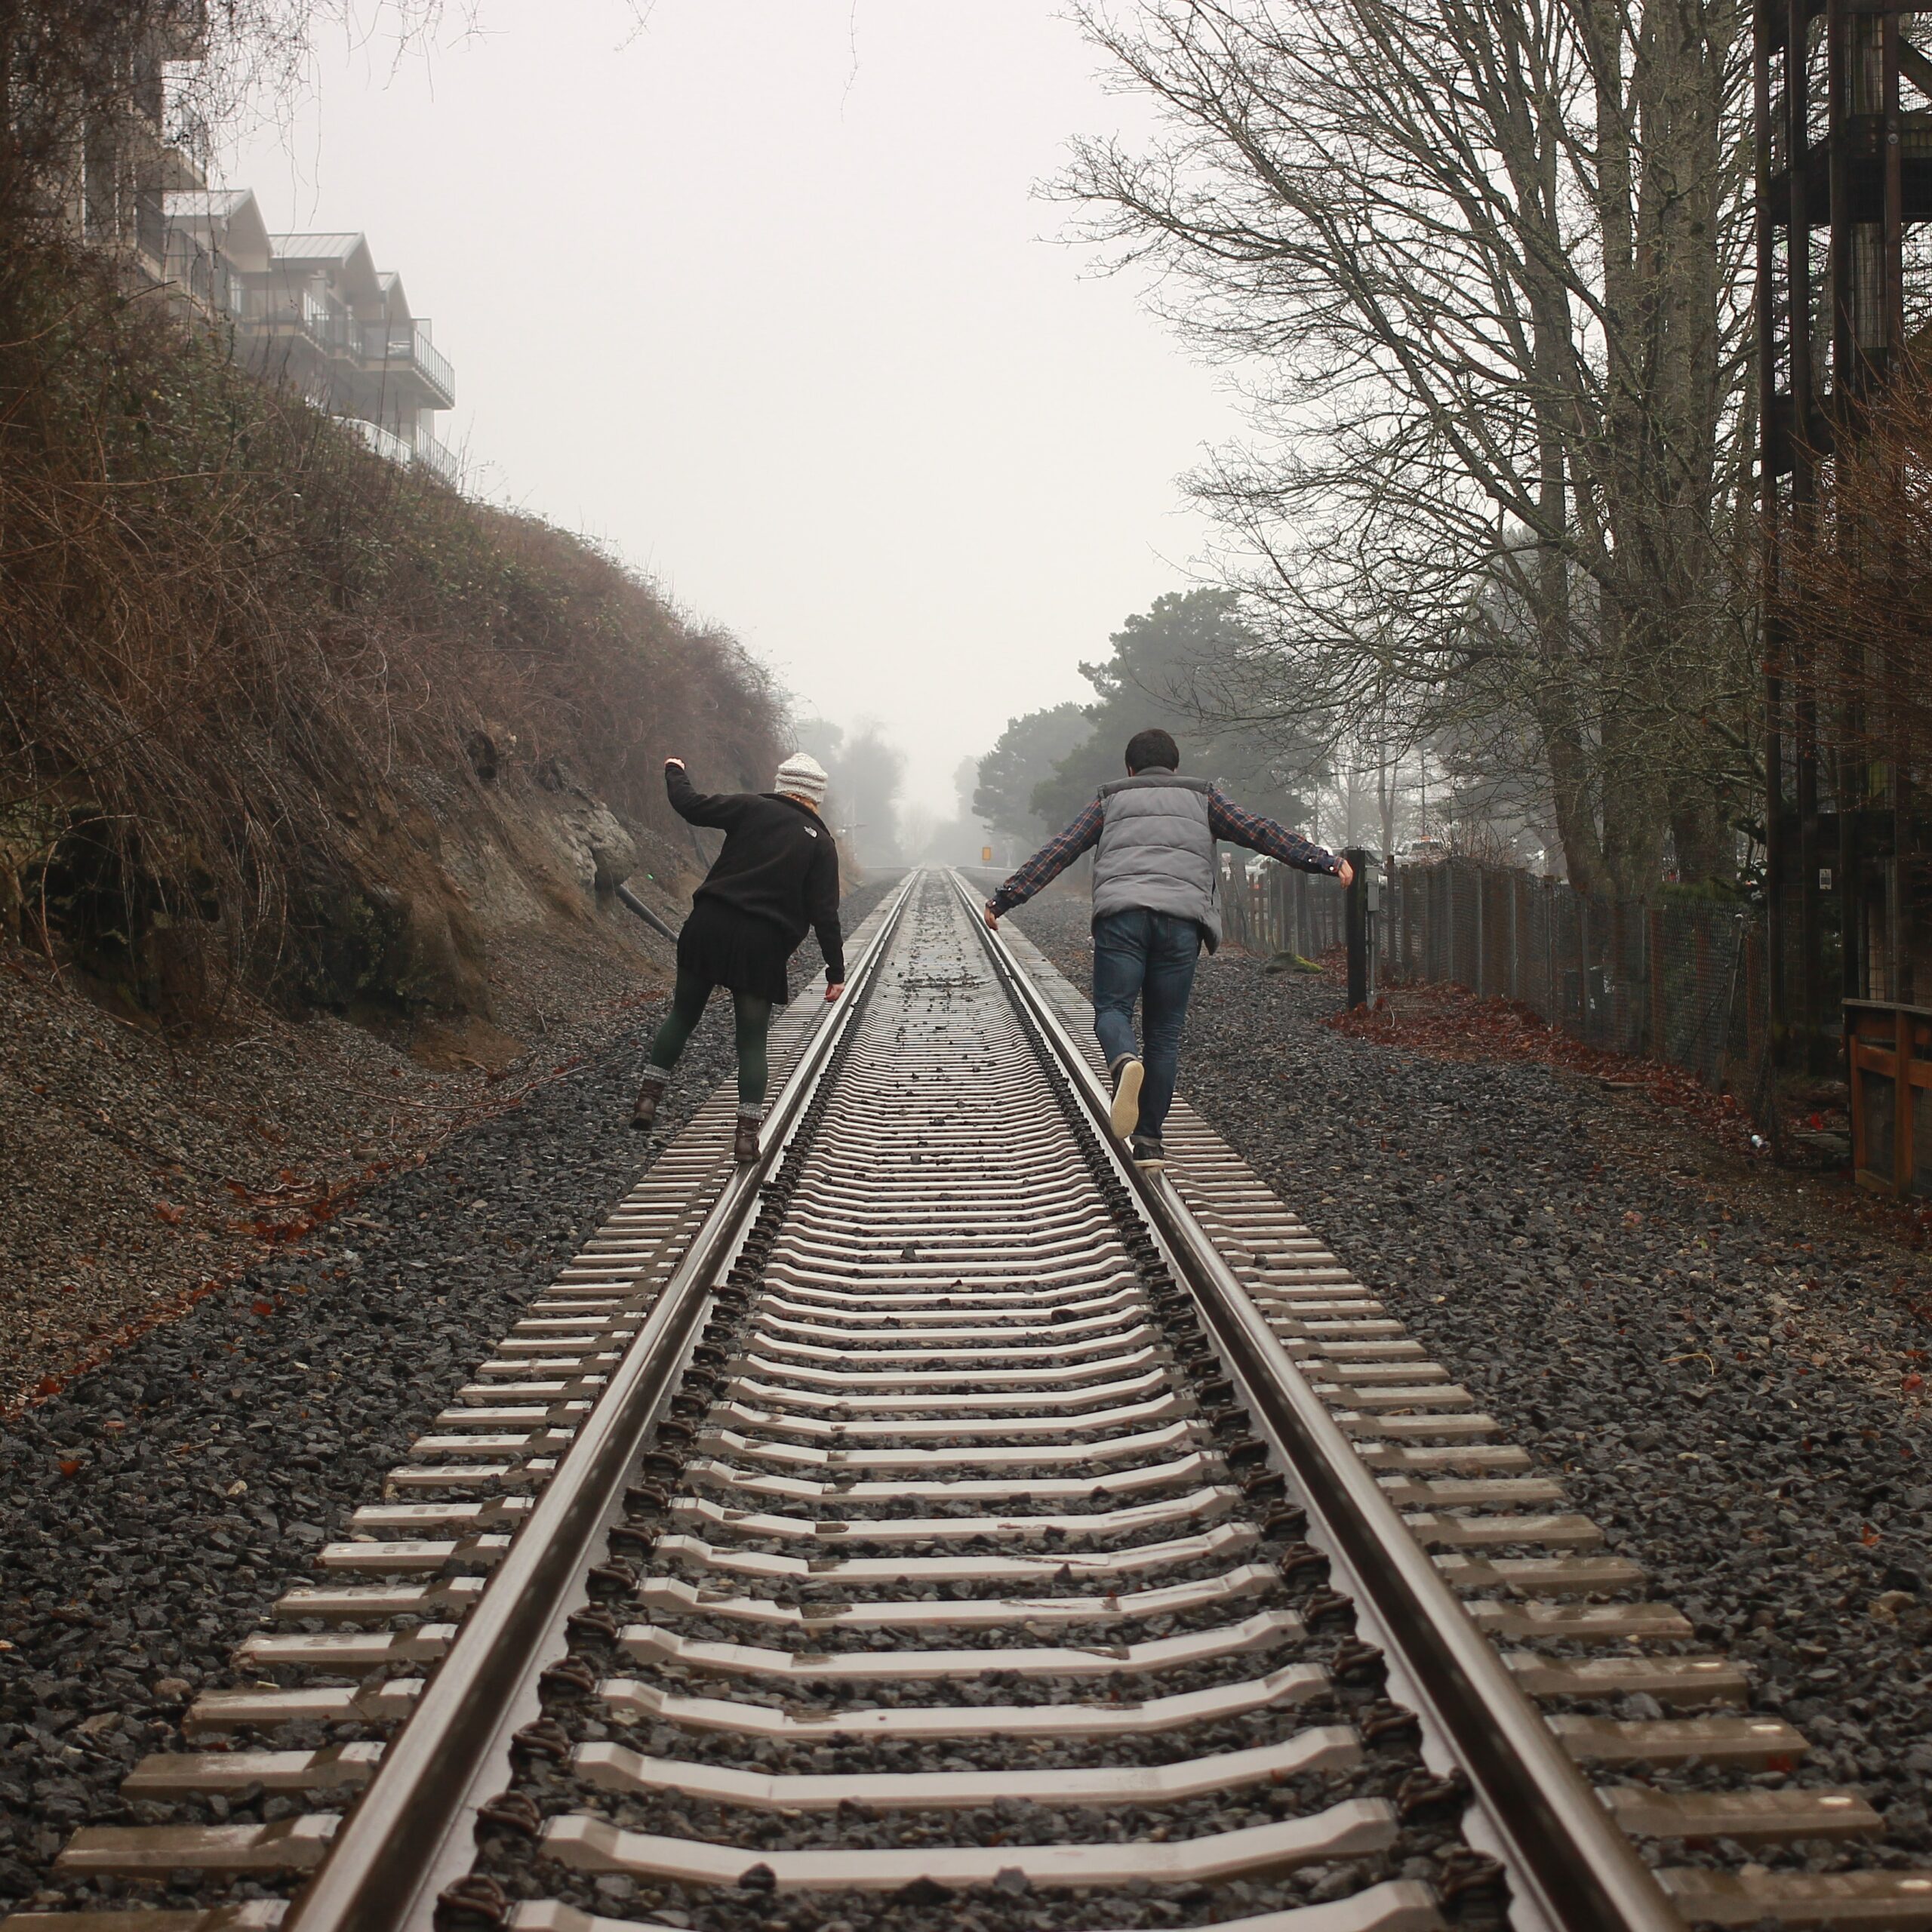 2 people balancing on railroad tracks